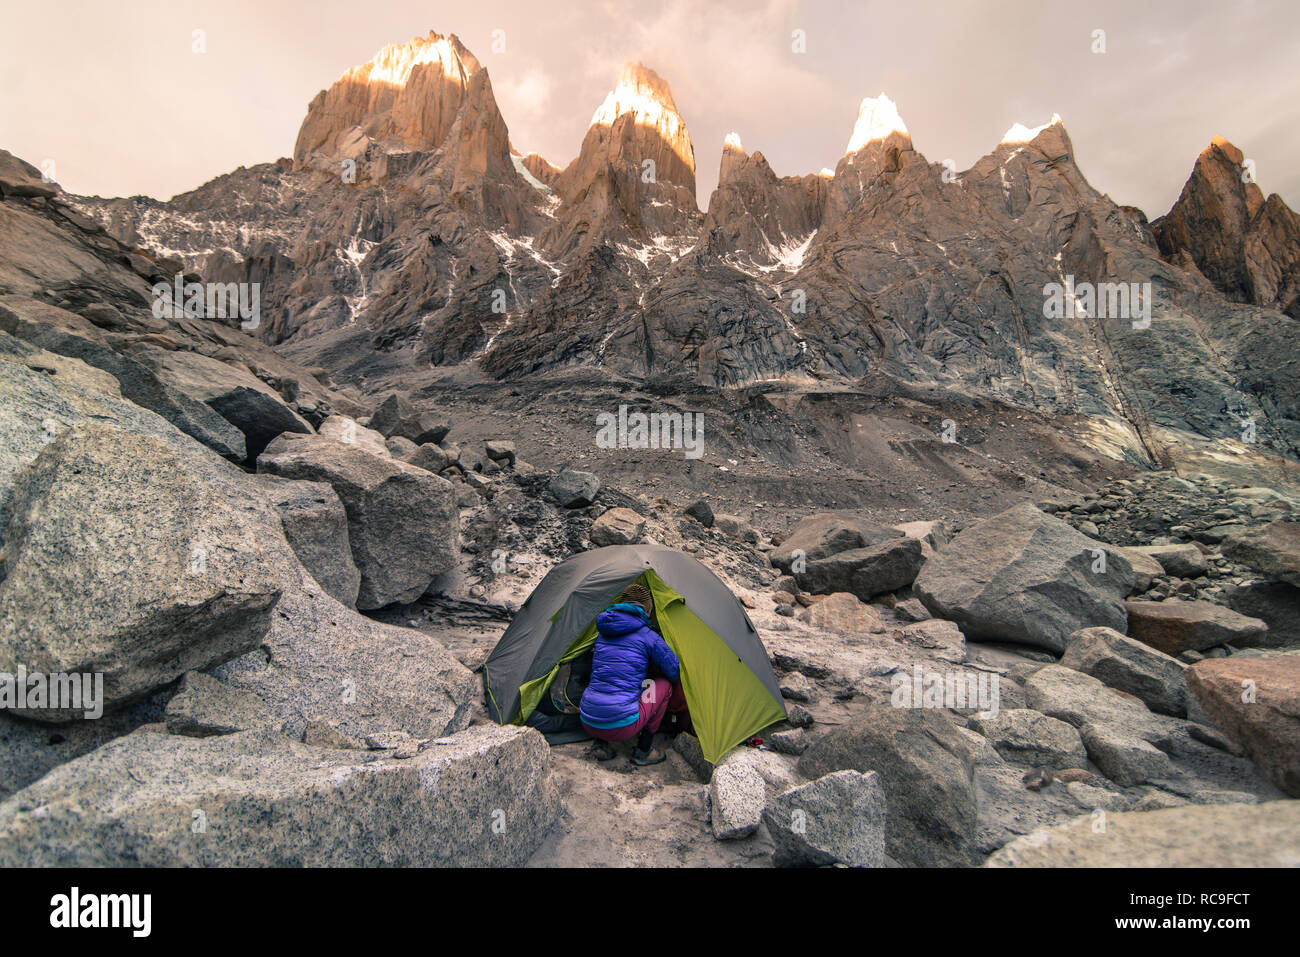 Rock climber camping in El Chaltén, south Patagonia, Argentina Stock Photo